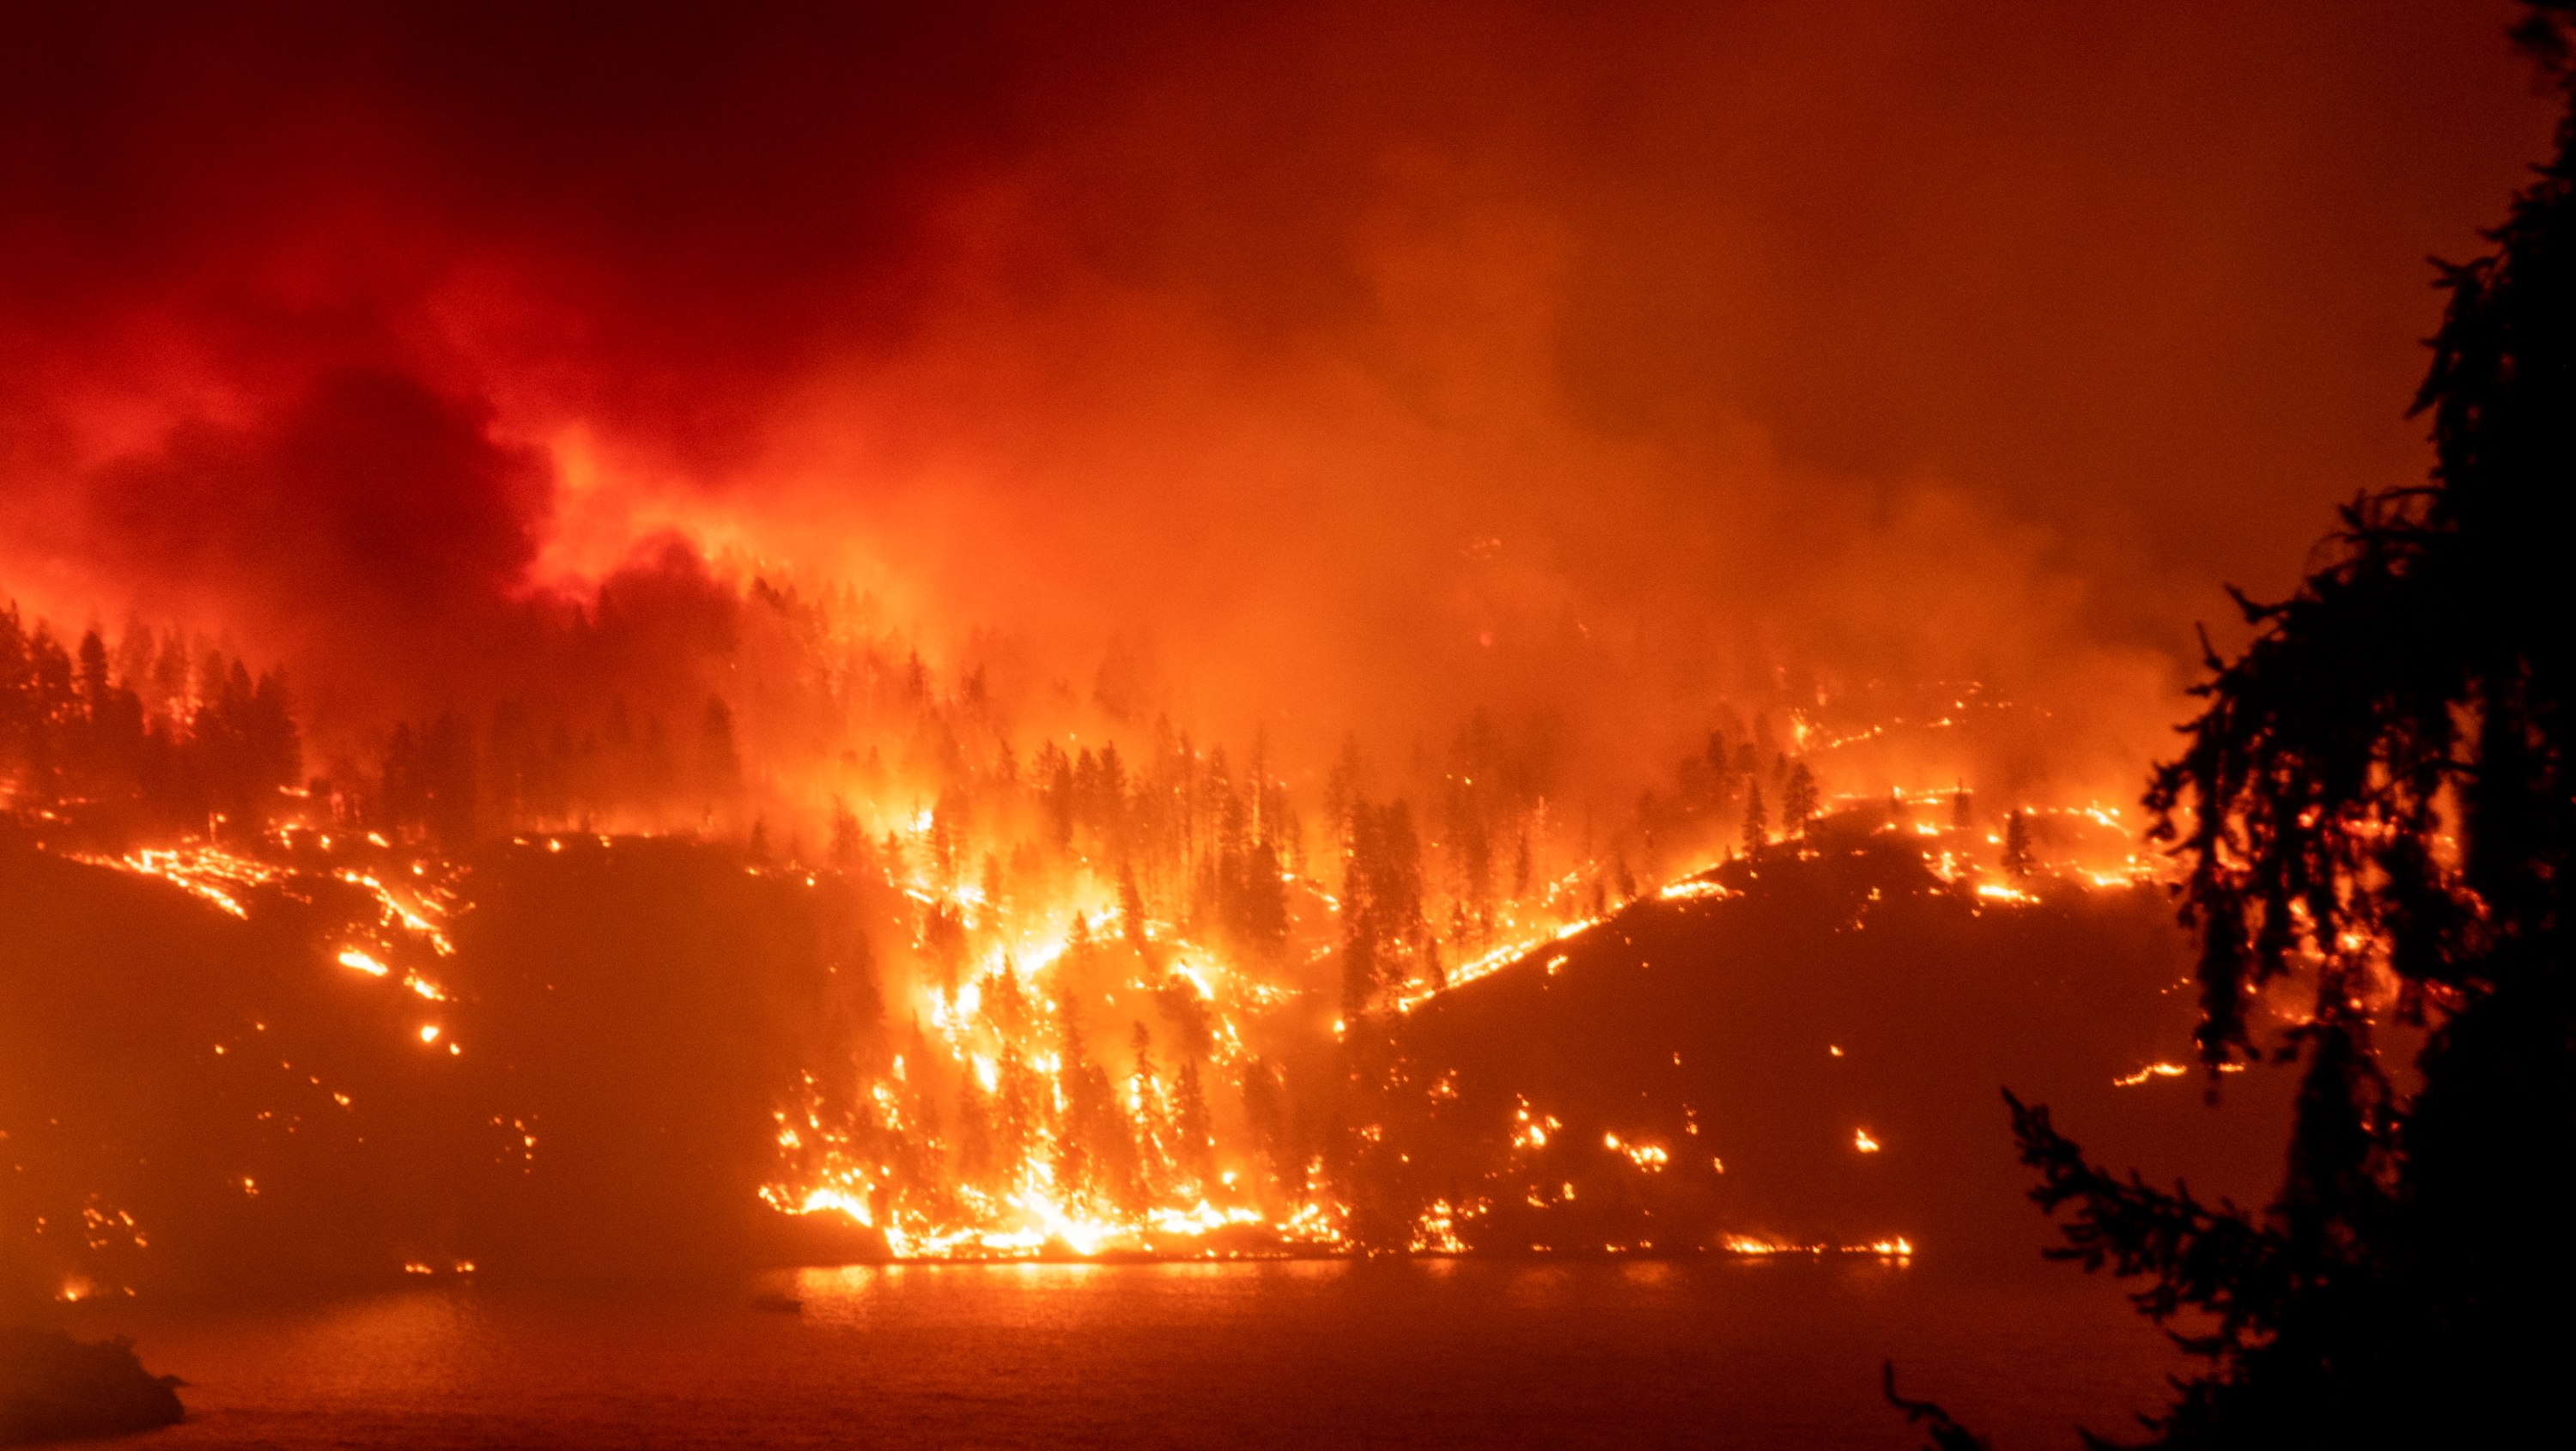 240314-wildfires-night-main-16x9-3000px.jpg